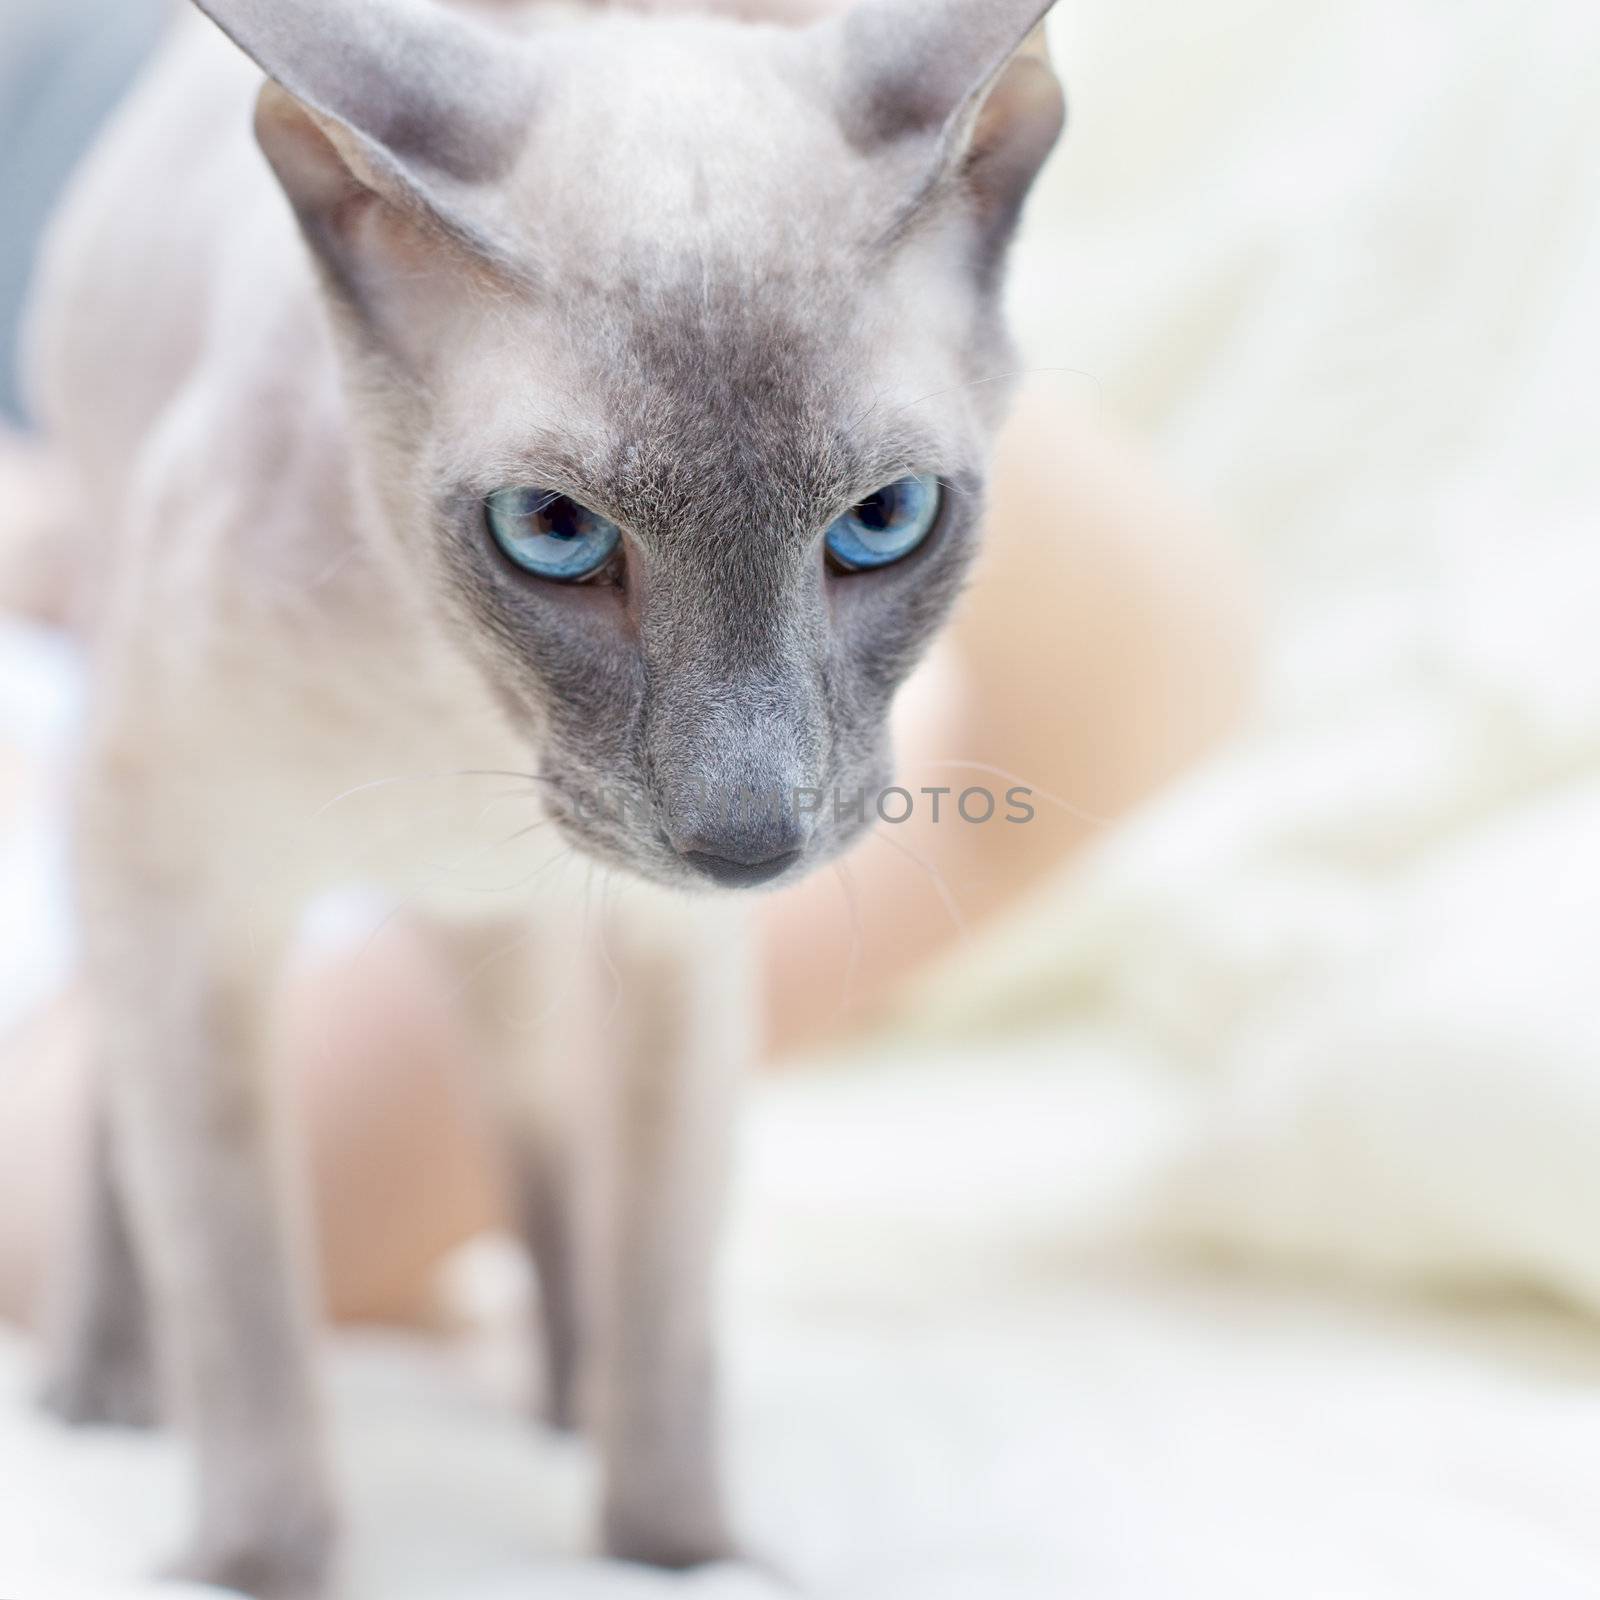 Hairless Cat by petr_malyshev